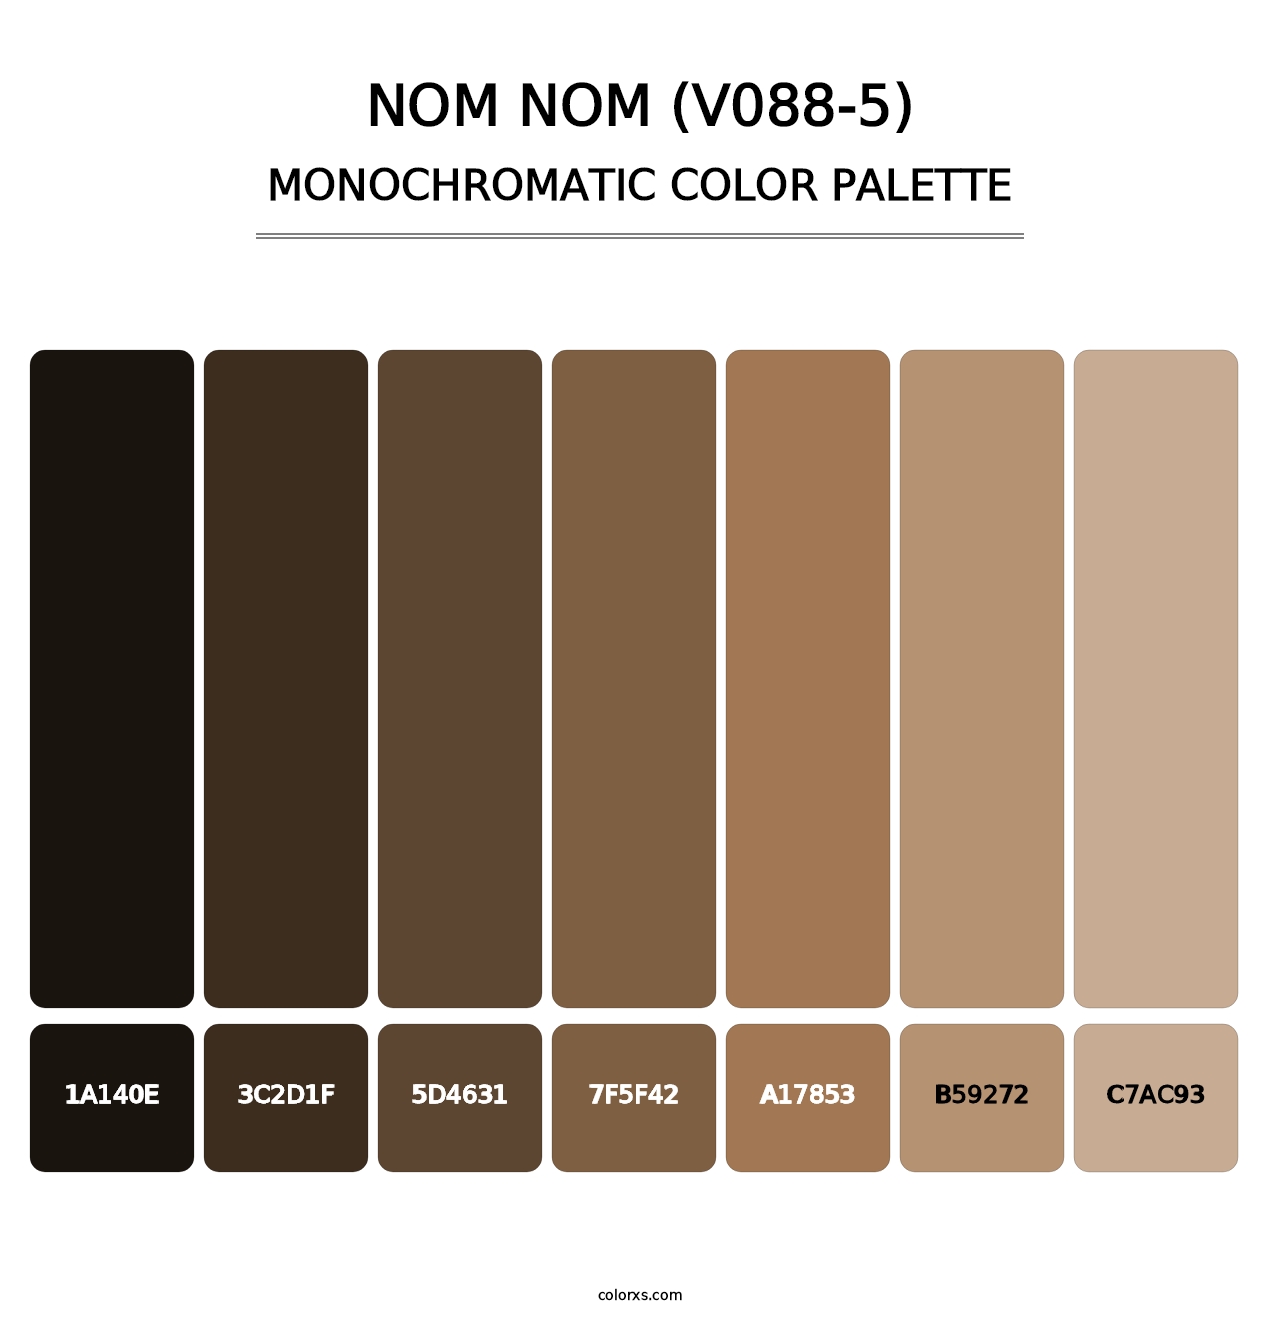 Nom Nom (V088-5) - Monochromatic Color Palette